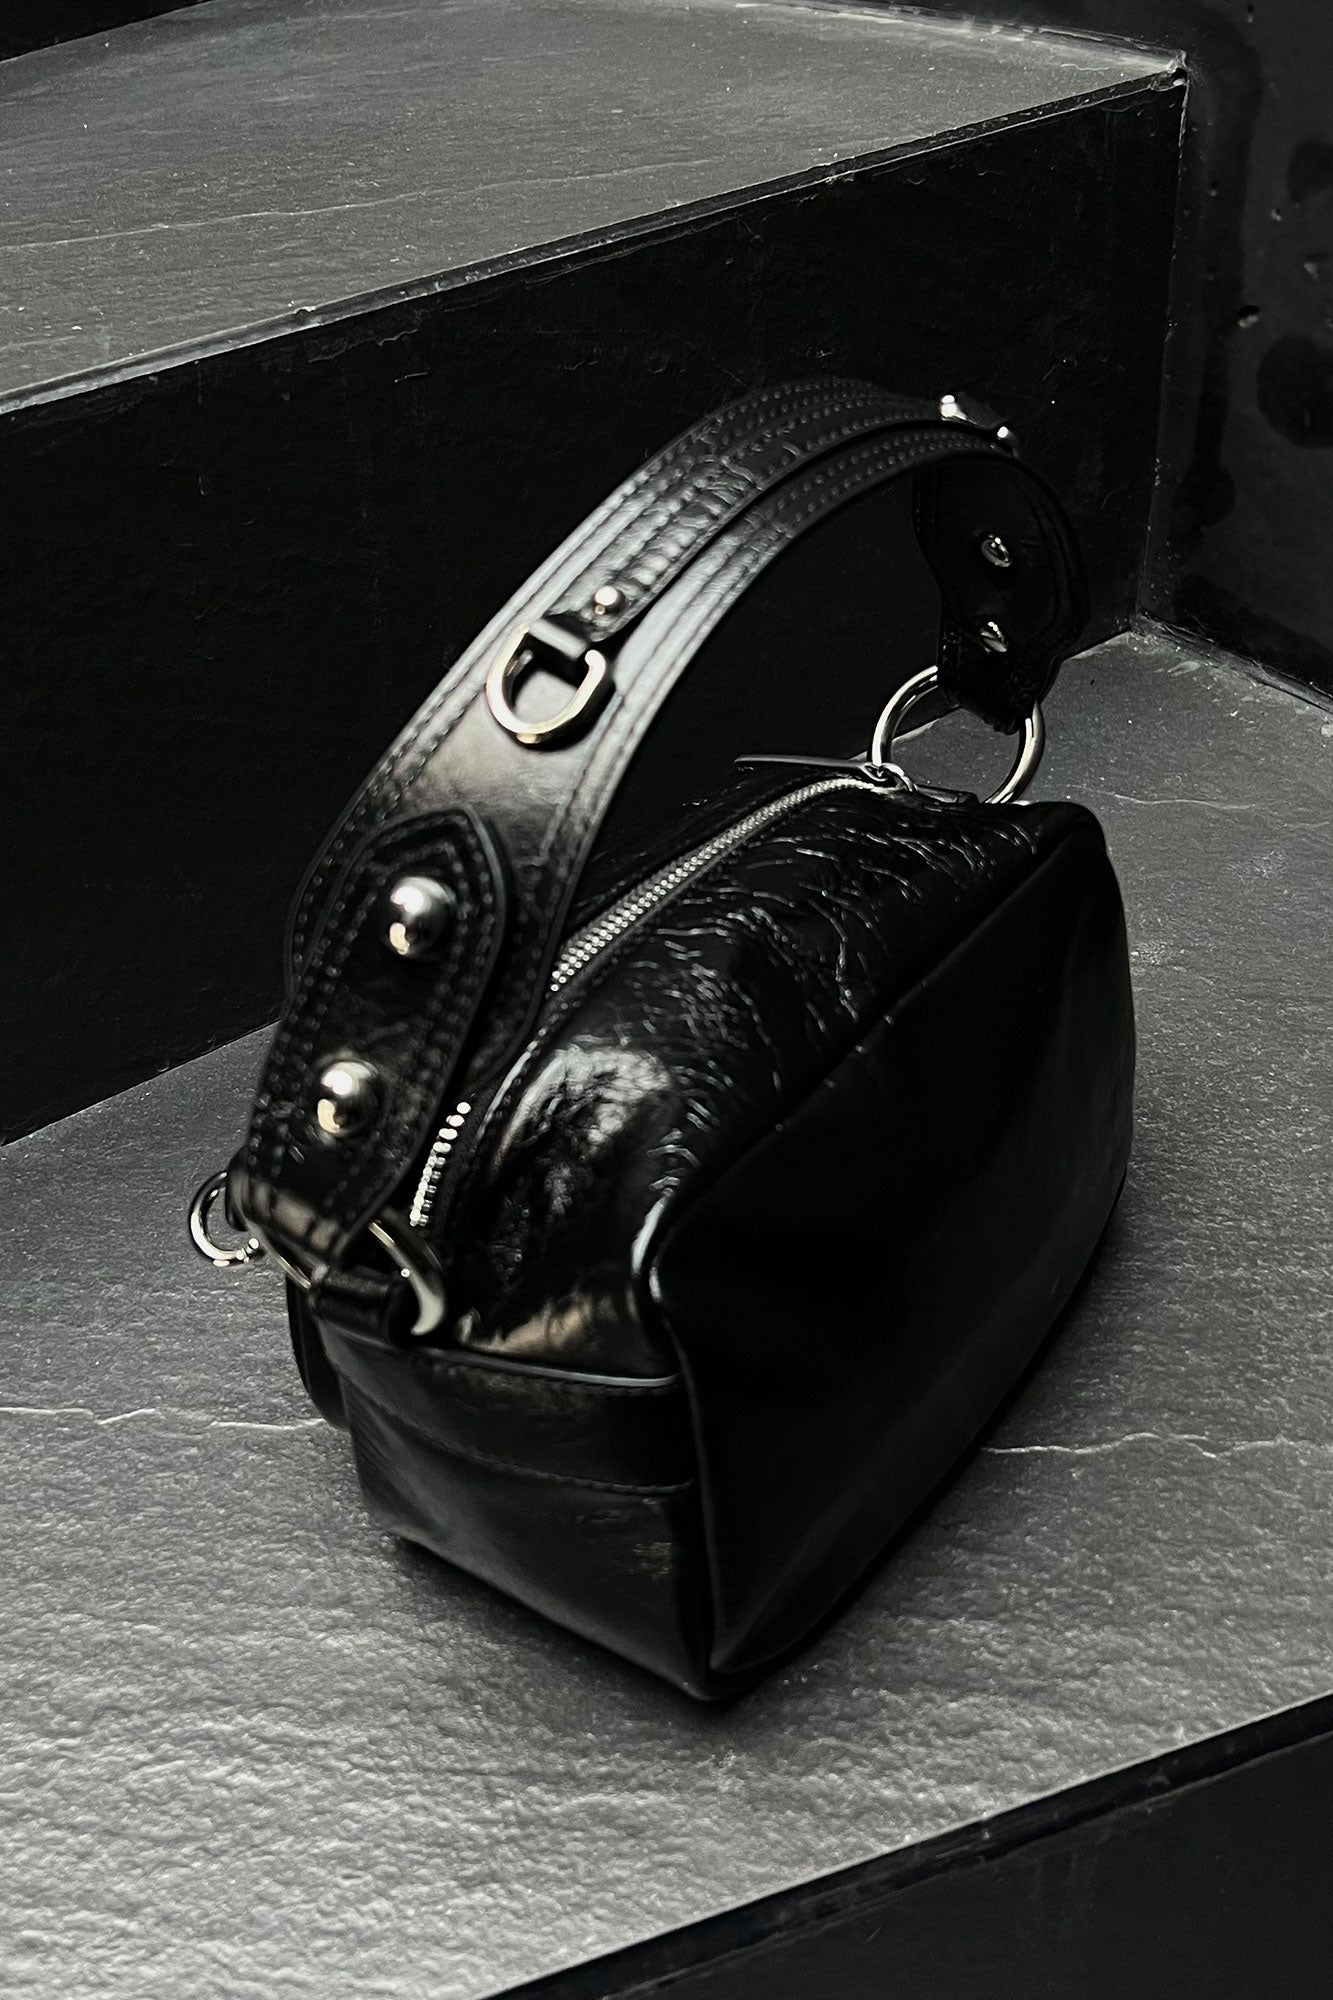 Genuine leather retro functional handbag